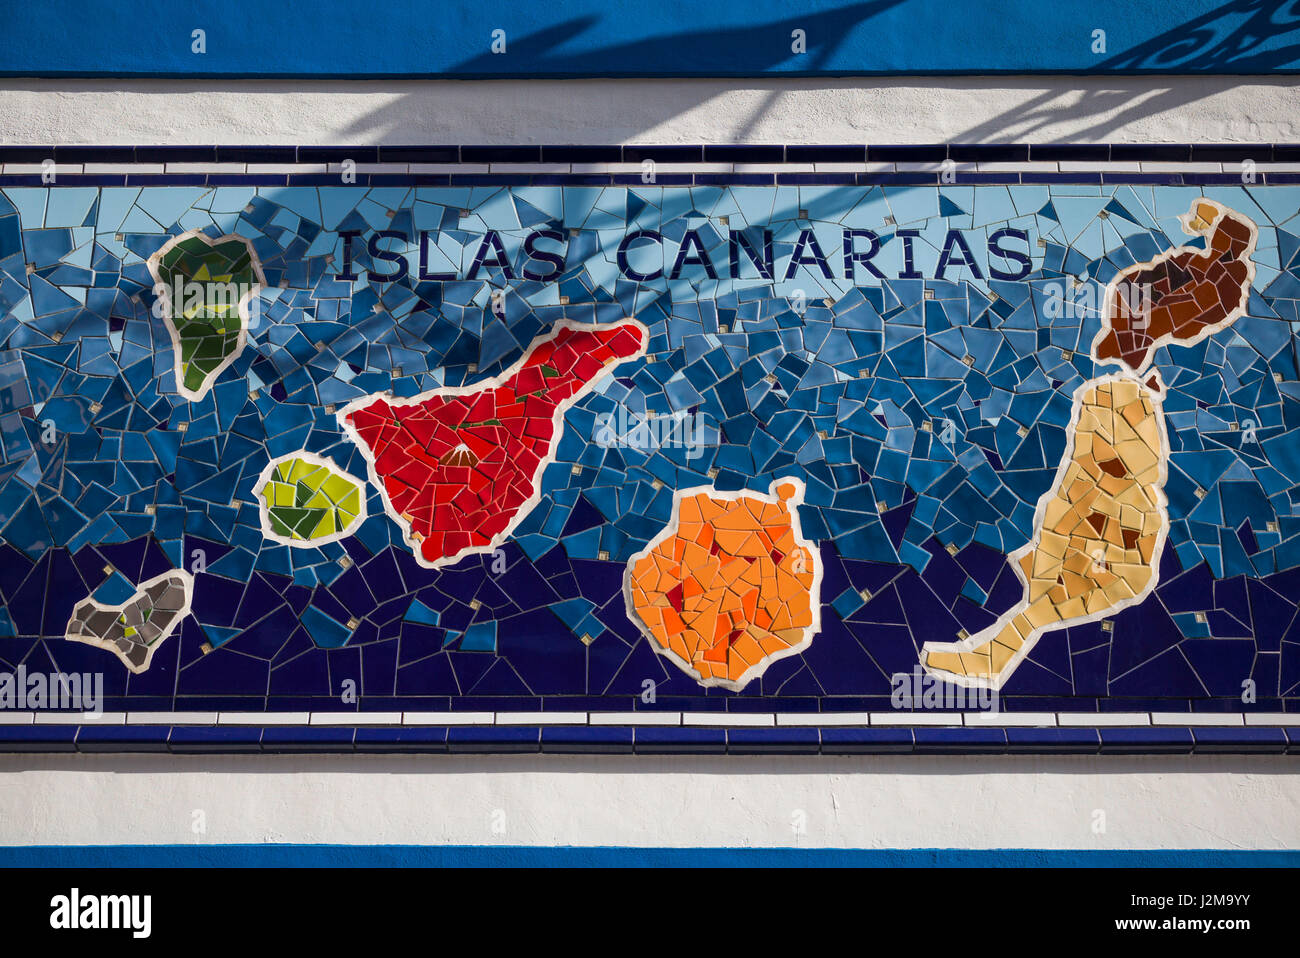 Spain, Canary Islands, Tenerife, Puerto de la Cruz, mural with Canary Islands map Stock Photo